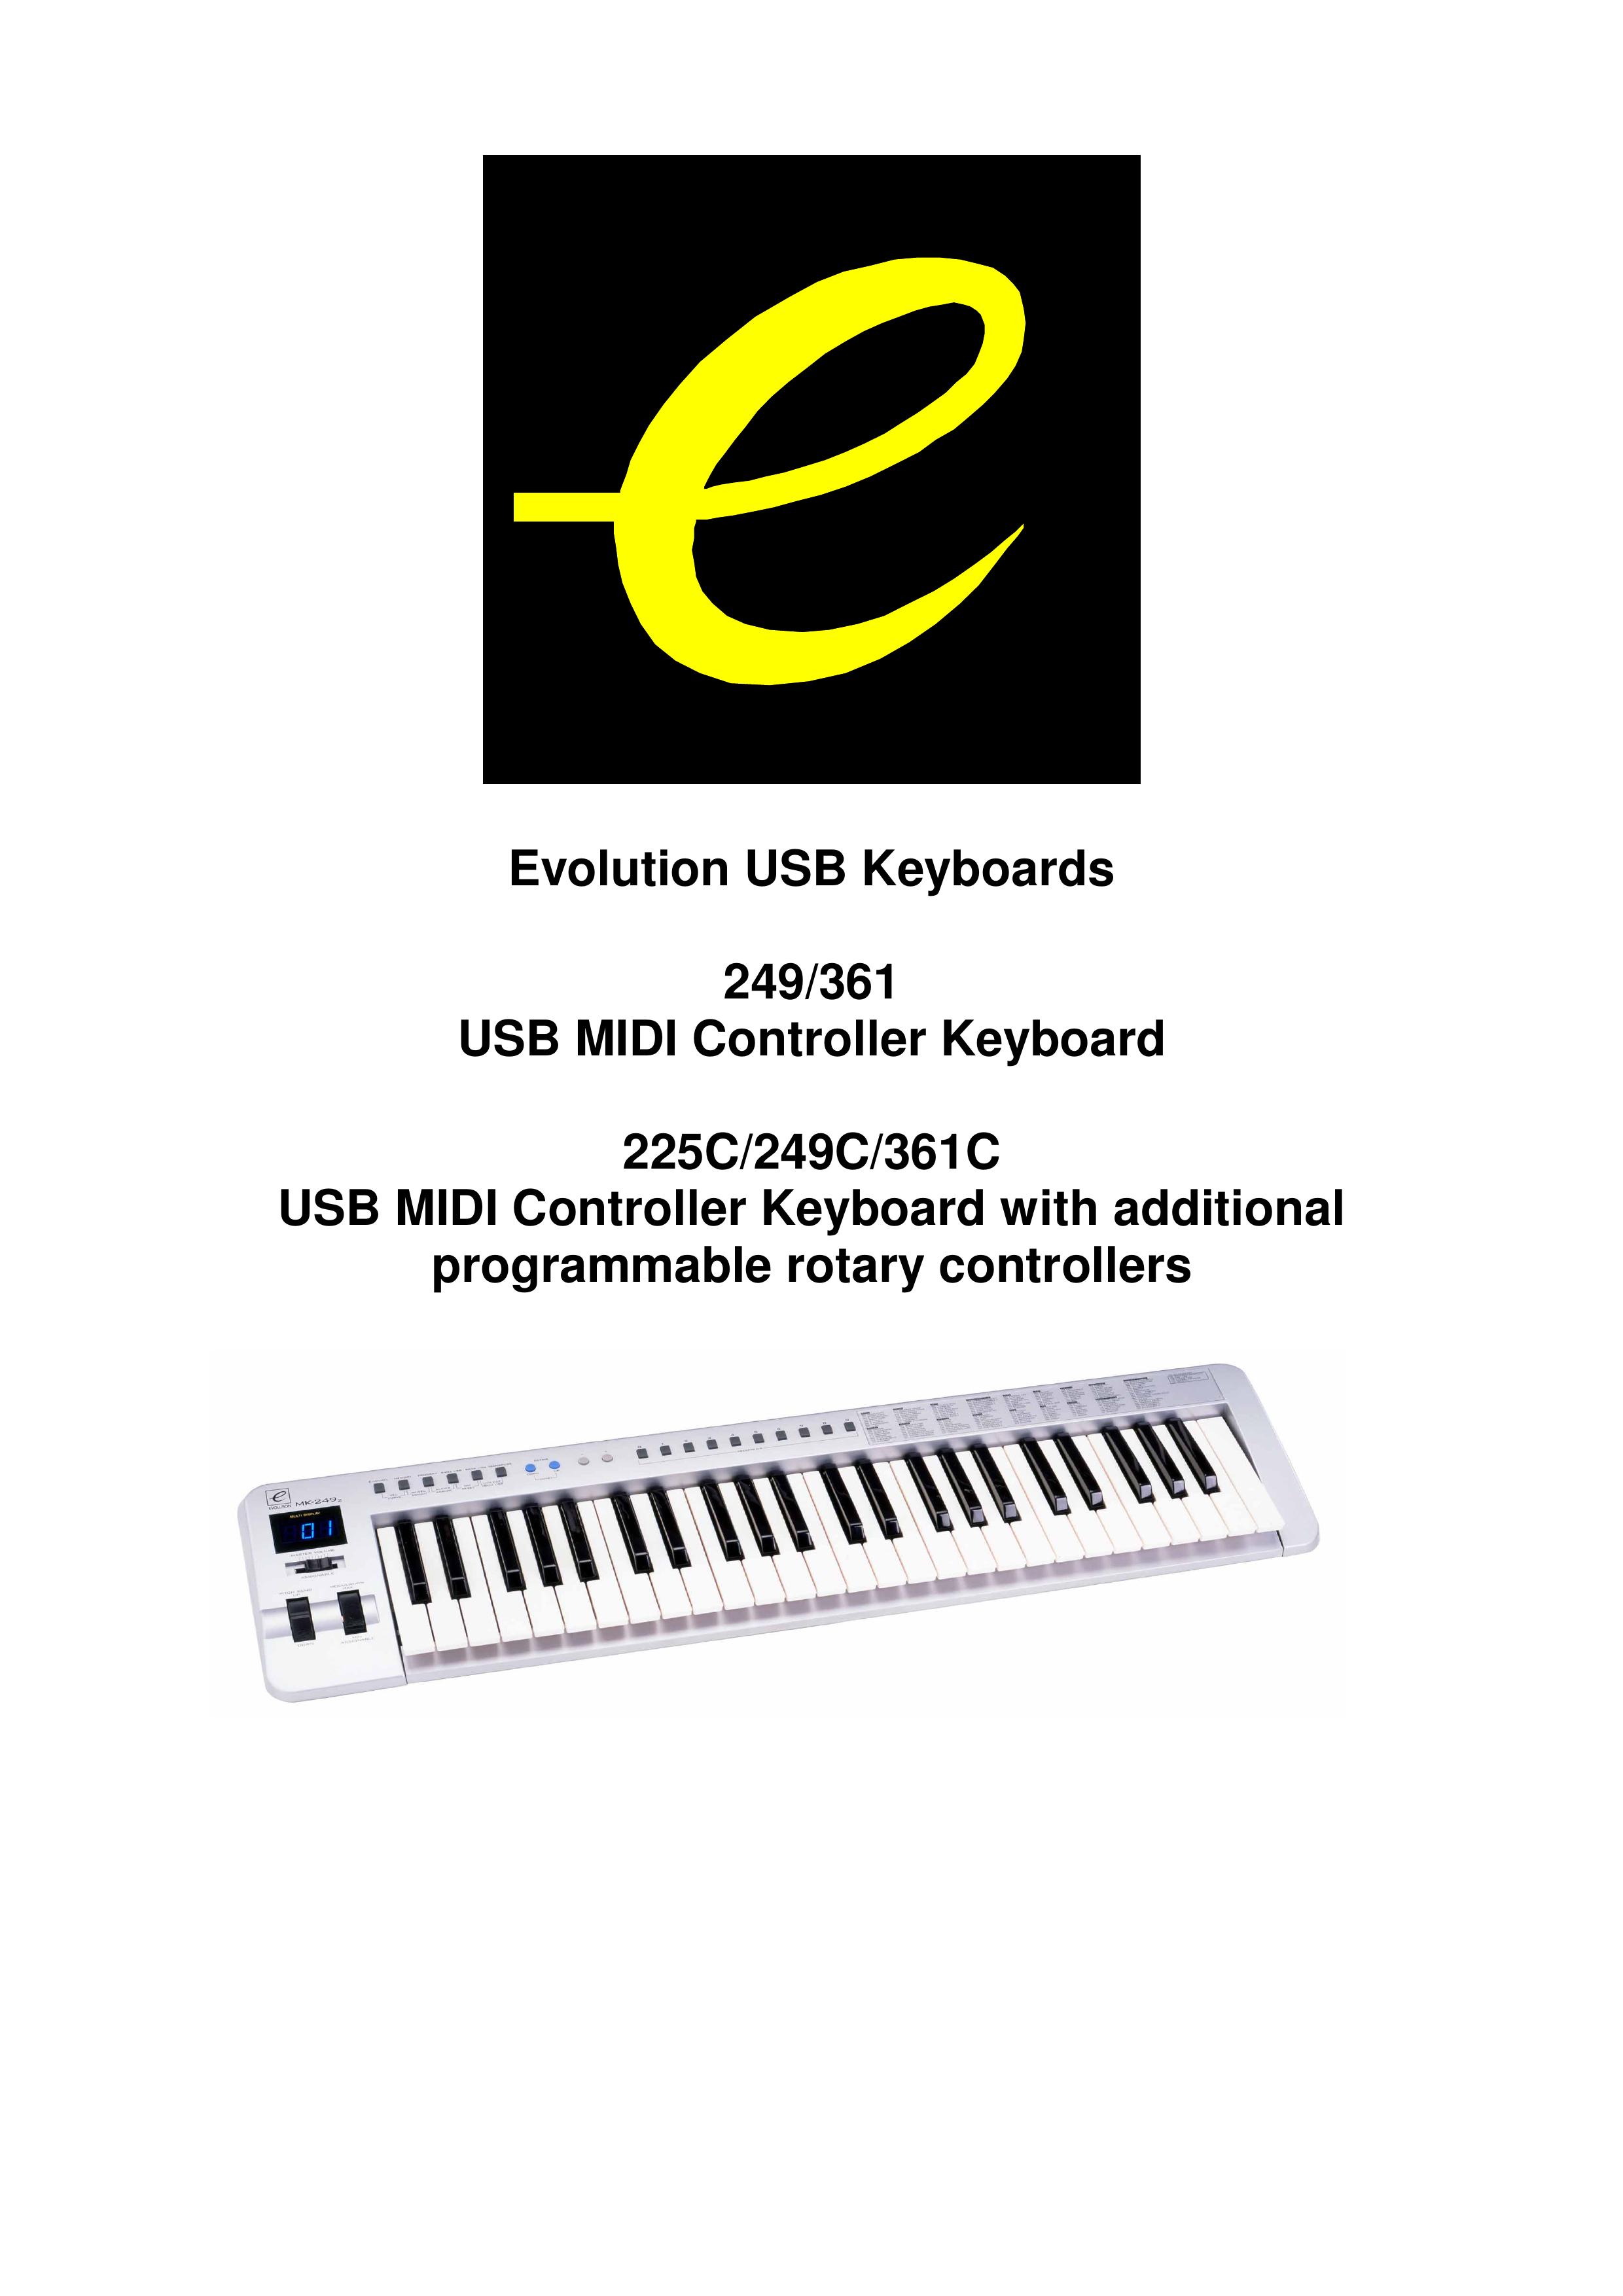 Evolution Technologies 249 Electronic Keyboard User Manual